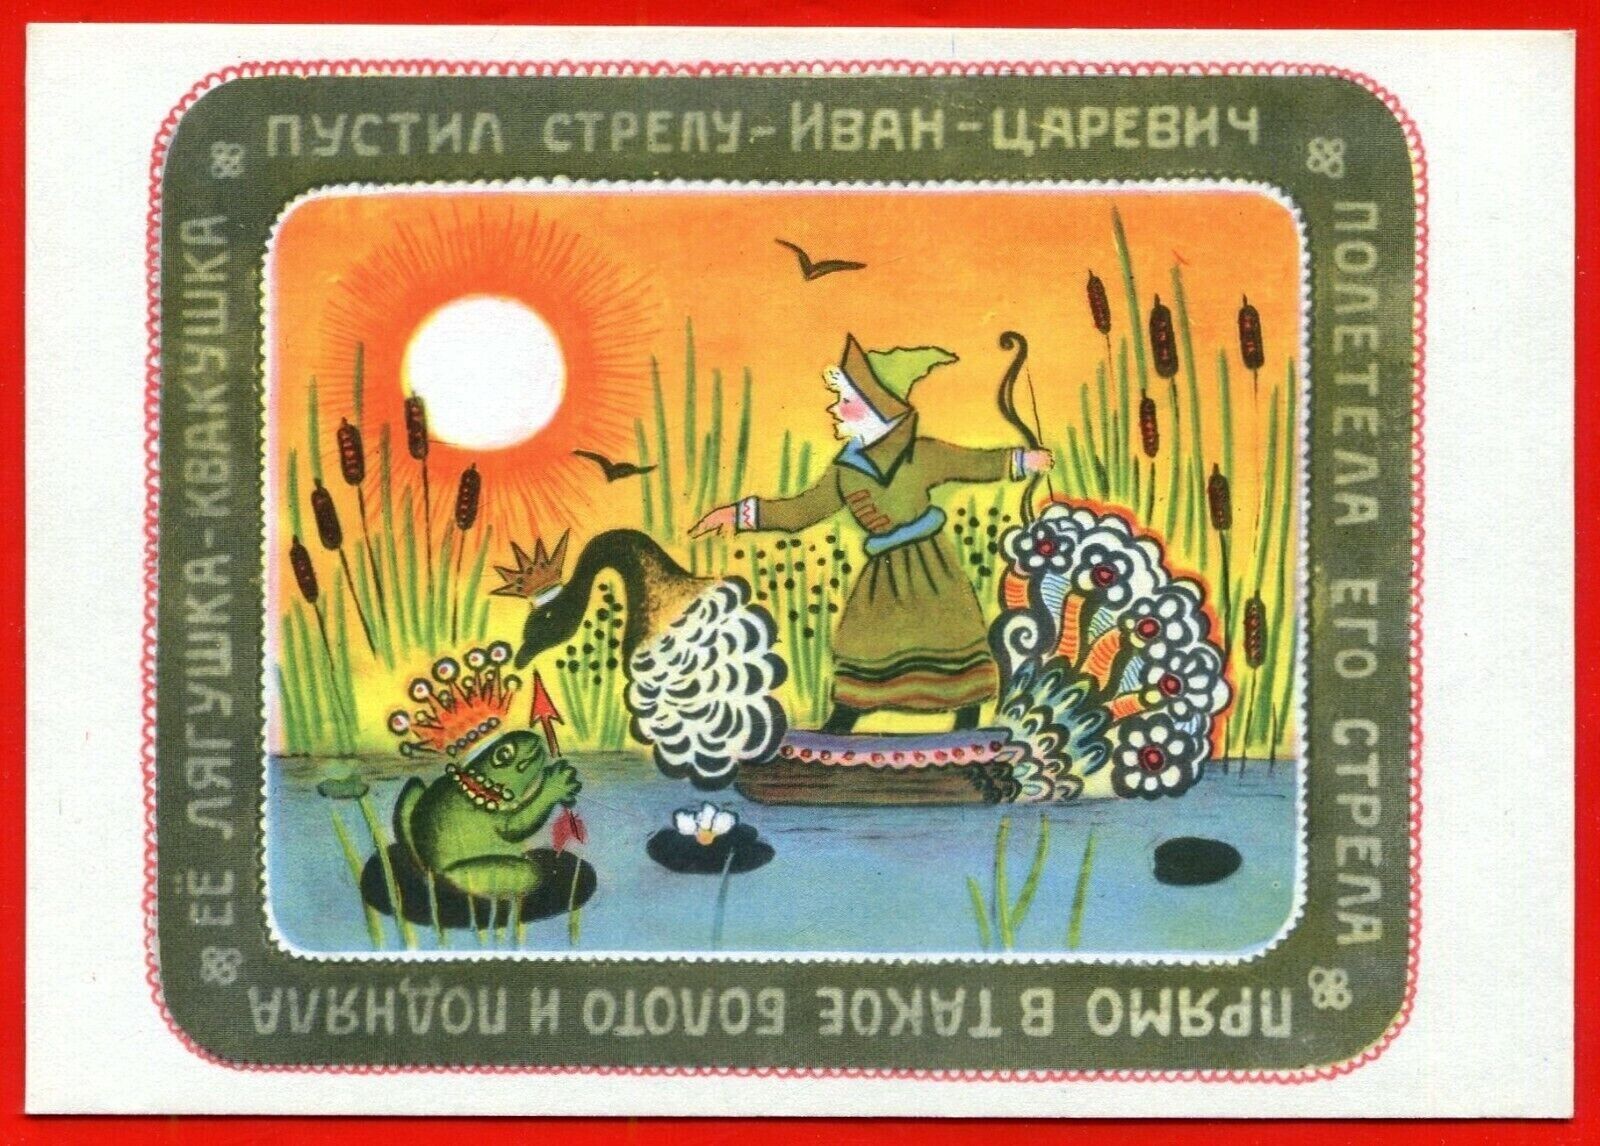 1967 Fairy tale Frog Princess GUY Tsarevich ART VASNETSOV RUSSIAN POSTCARD Old